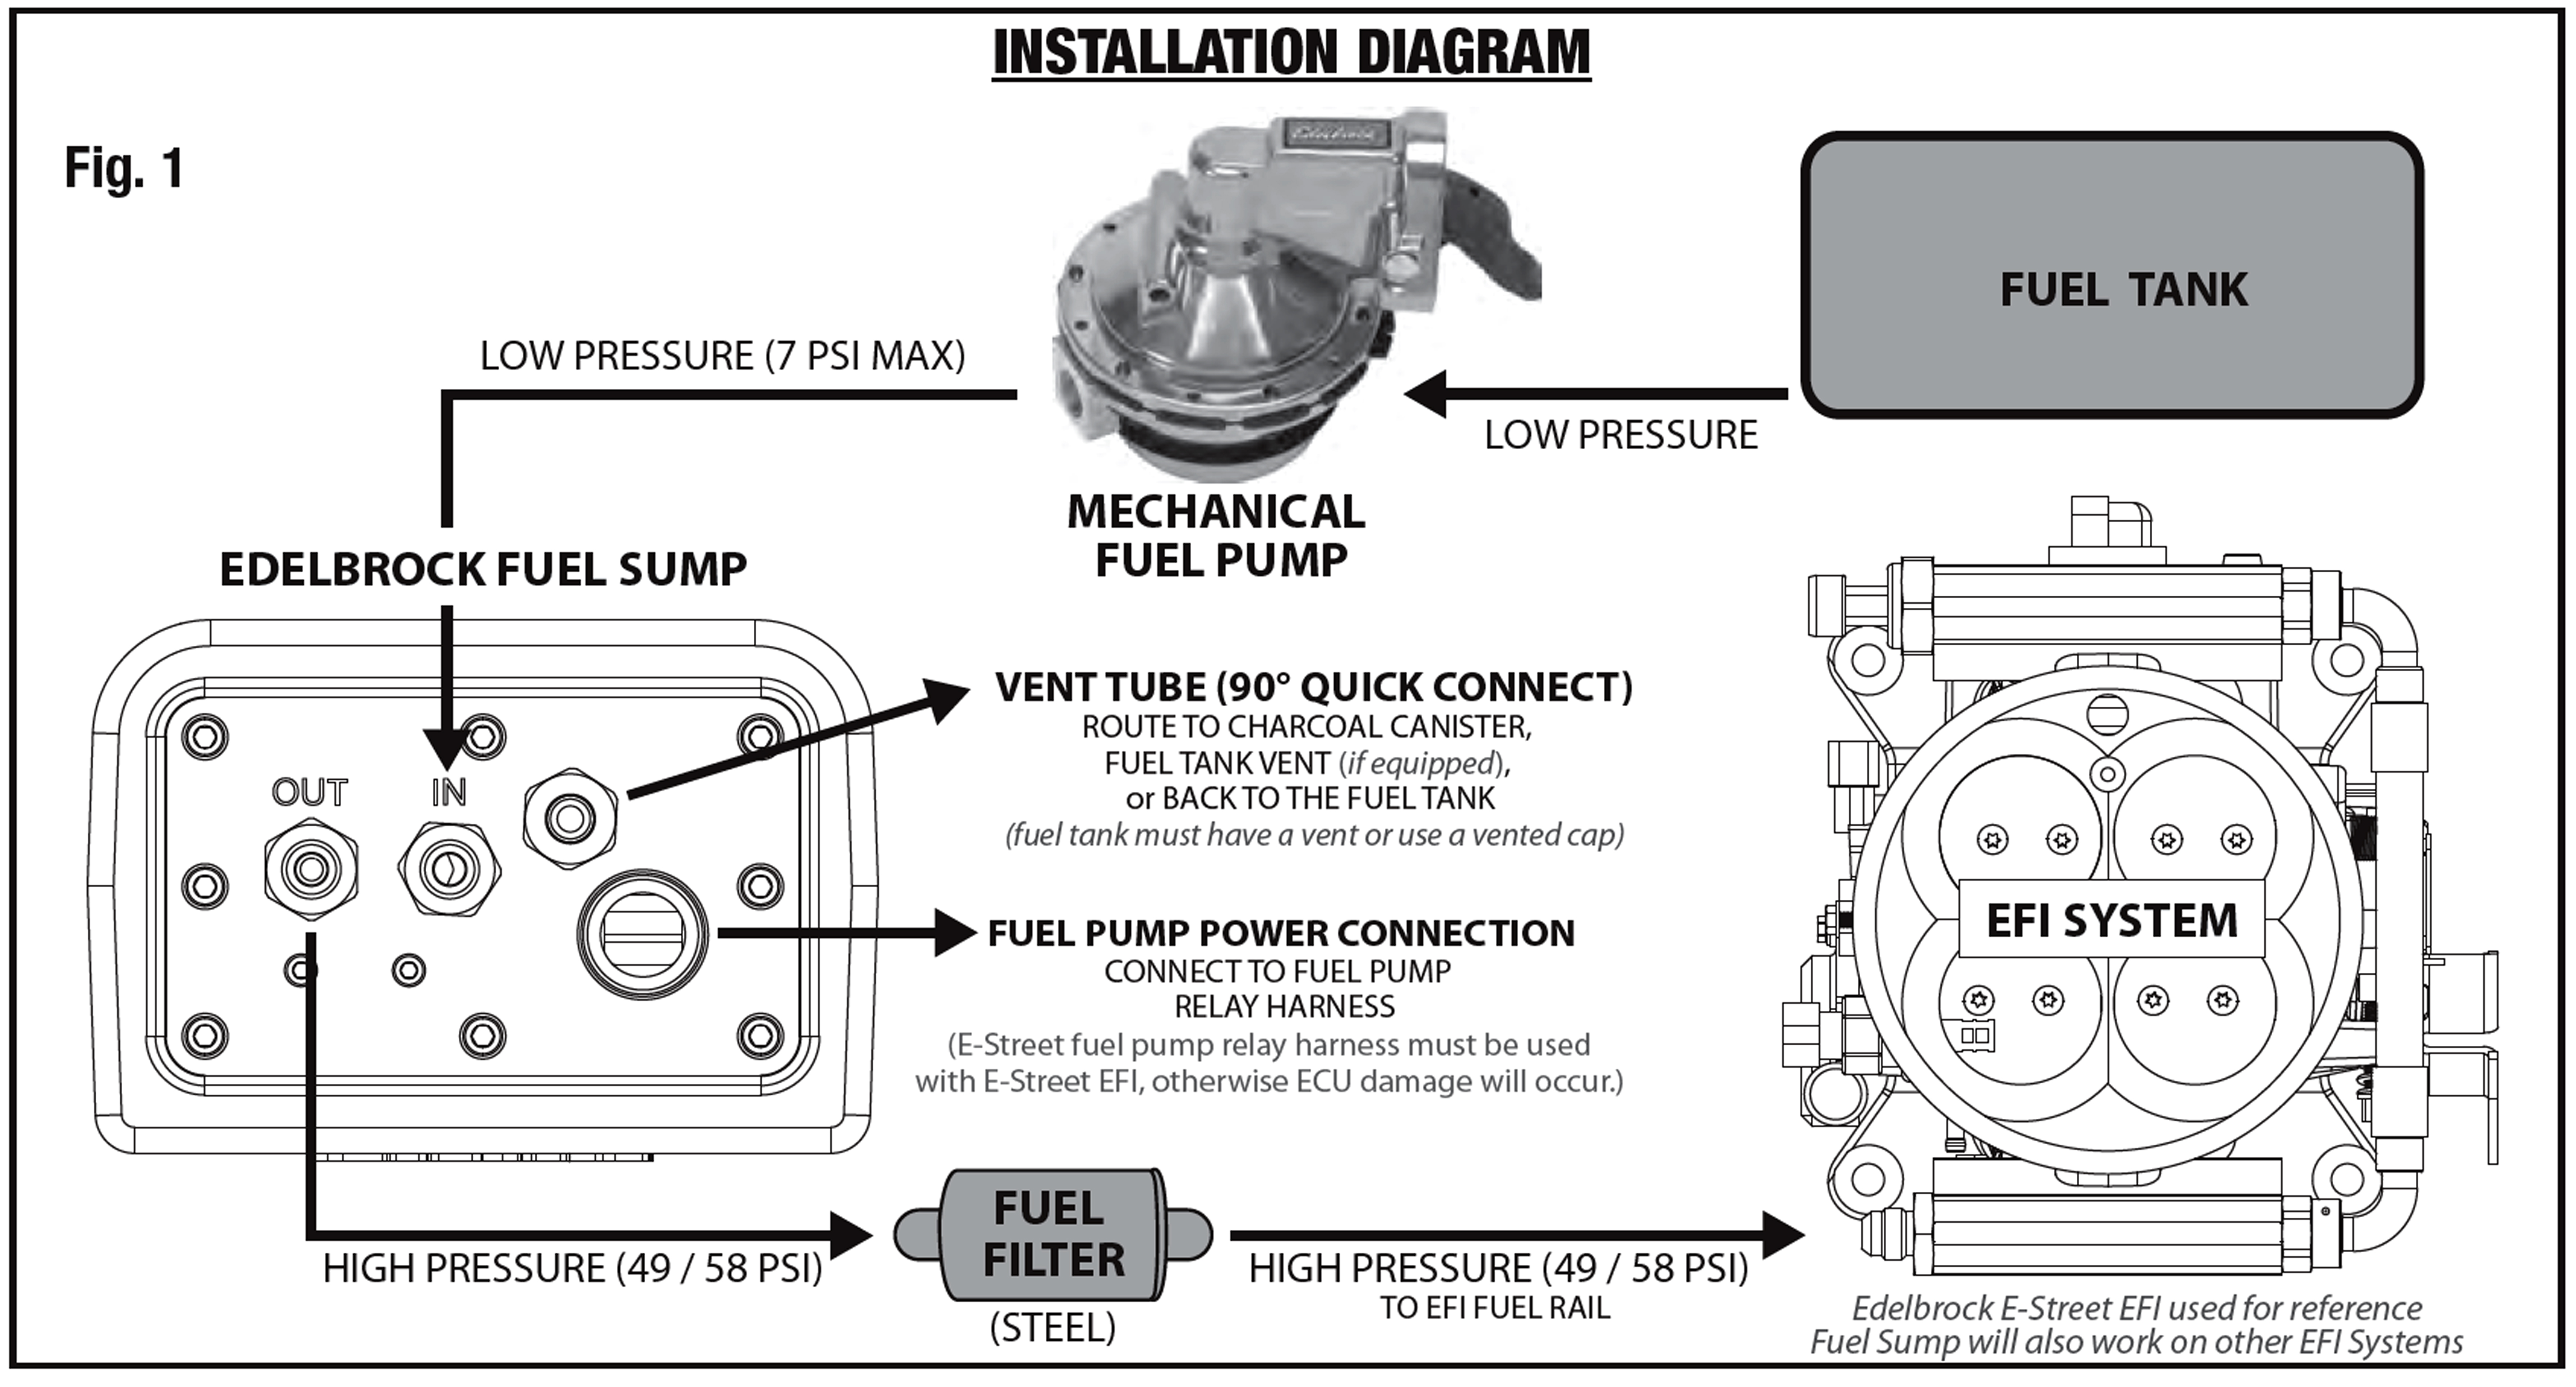 polaris booster pump wiring diagram